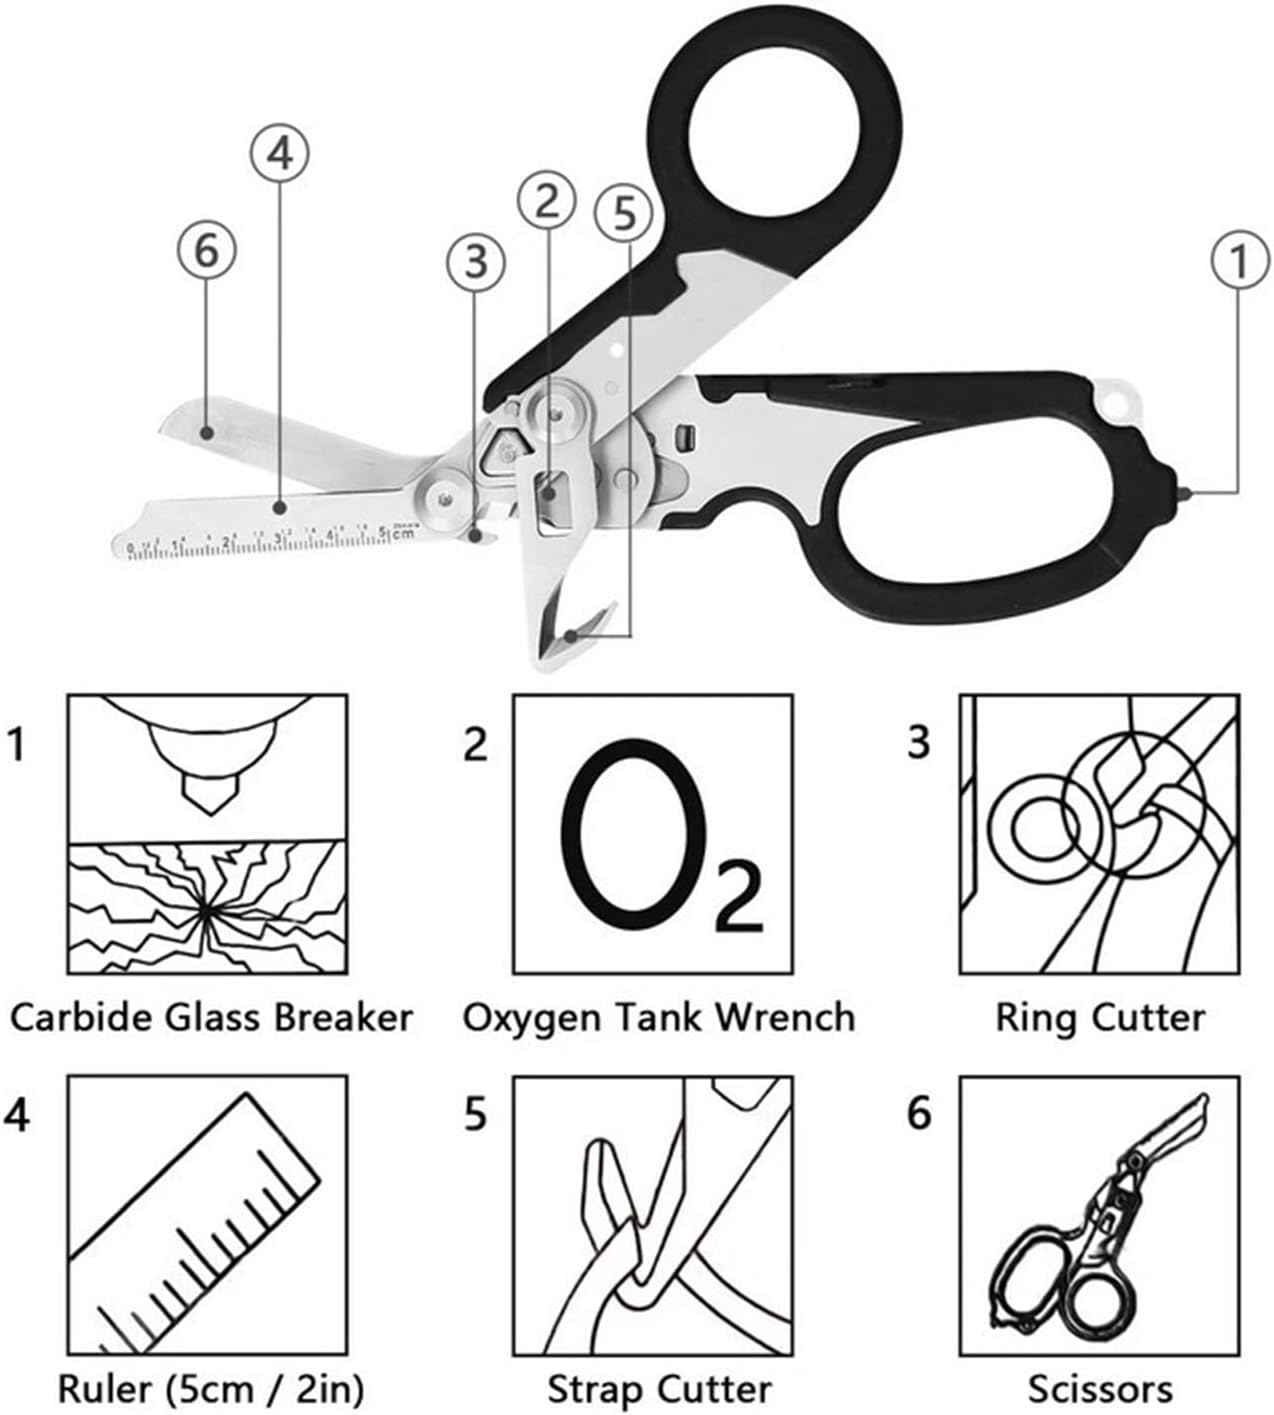 SHEH Emergency Shears,Trauma Shears Emergency Raptor Scissors Tool Stainless Steel with Strap Cutter and Glass Breaker.(Black)